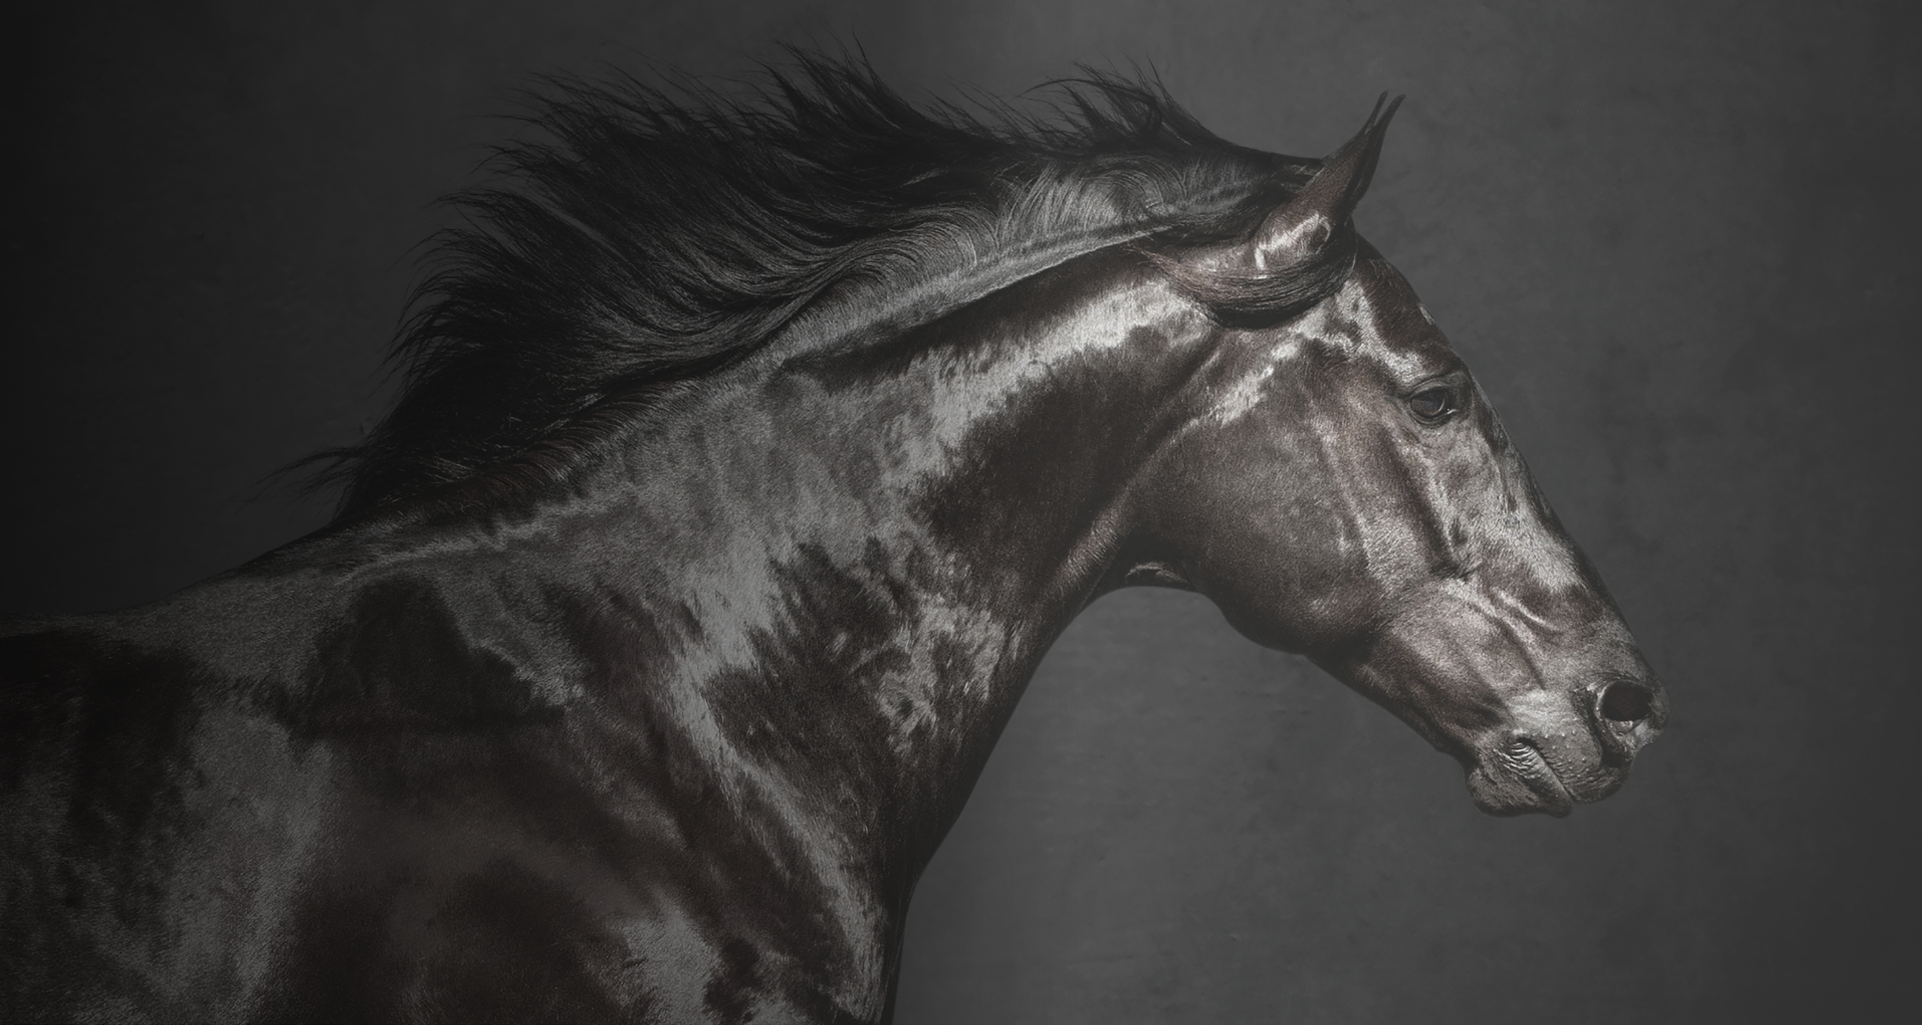 majestic black horse against a dark gray backdrop